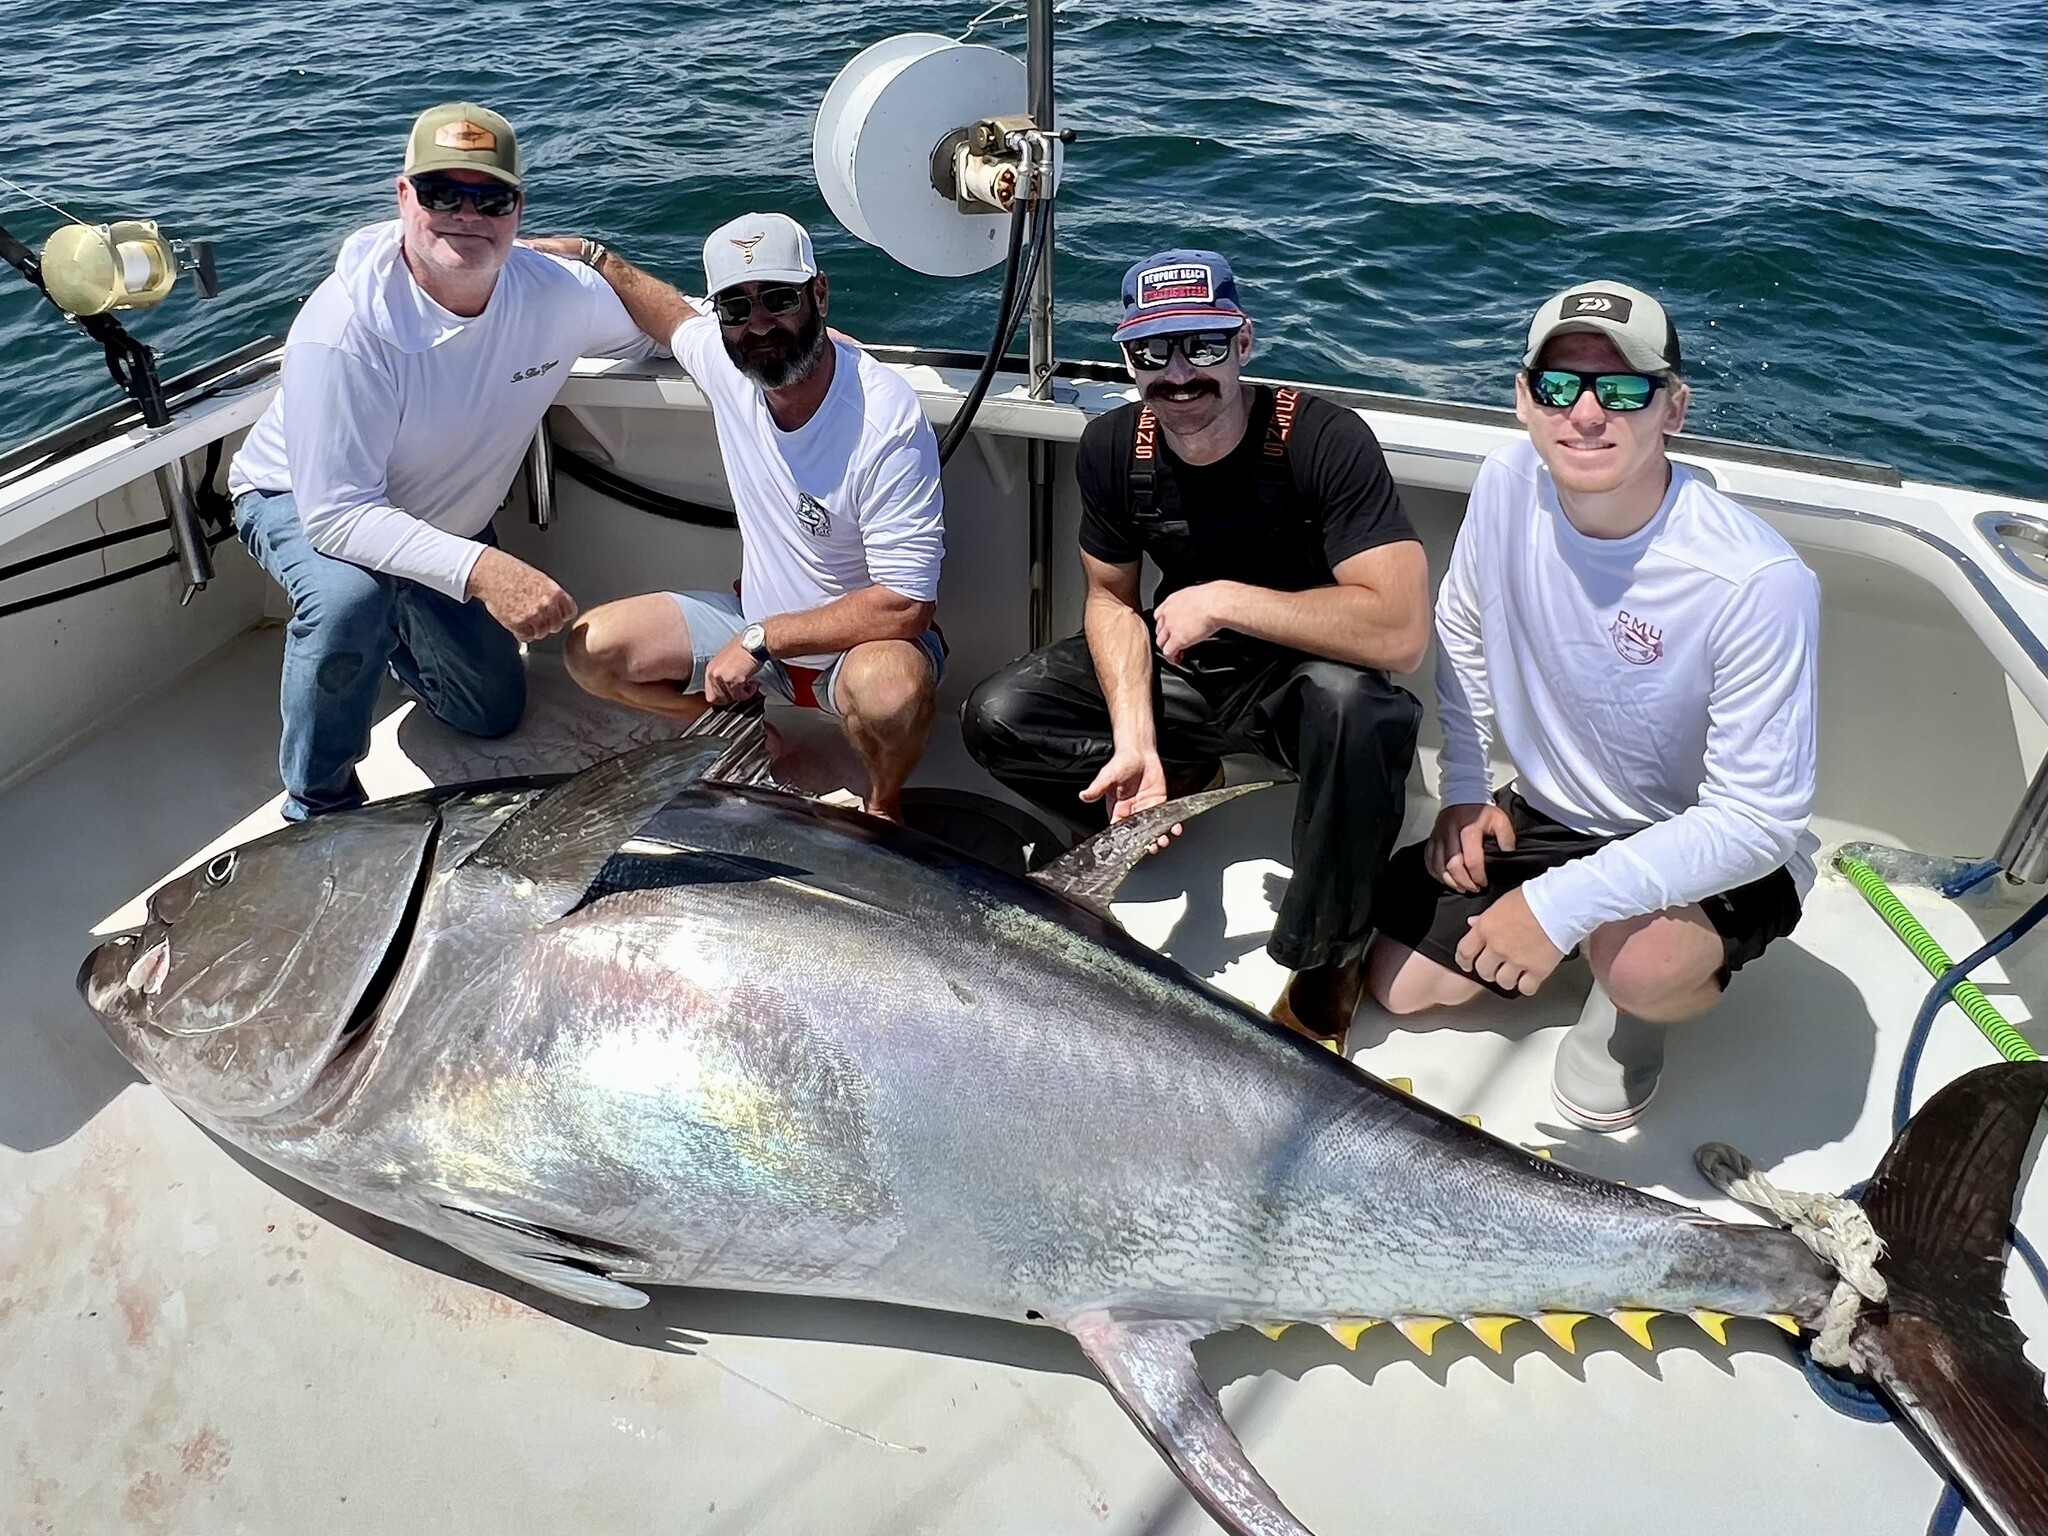 Giant Bluefin Tuna On Our Annual Trip - RJ Boyle